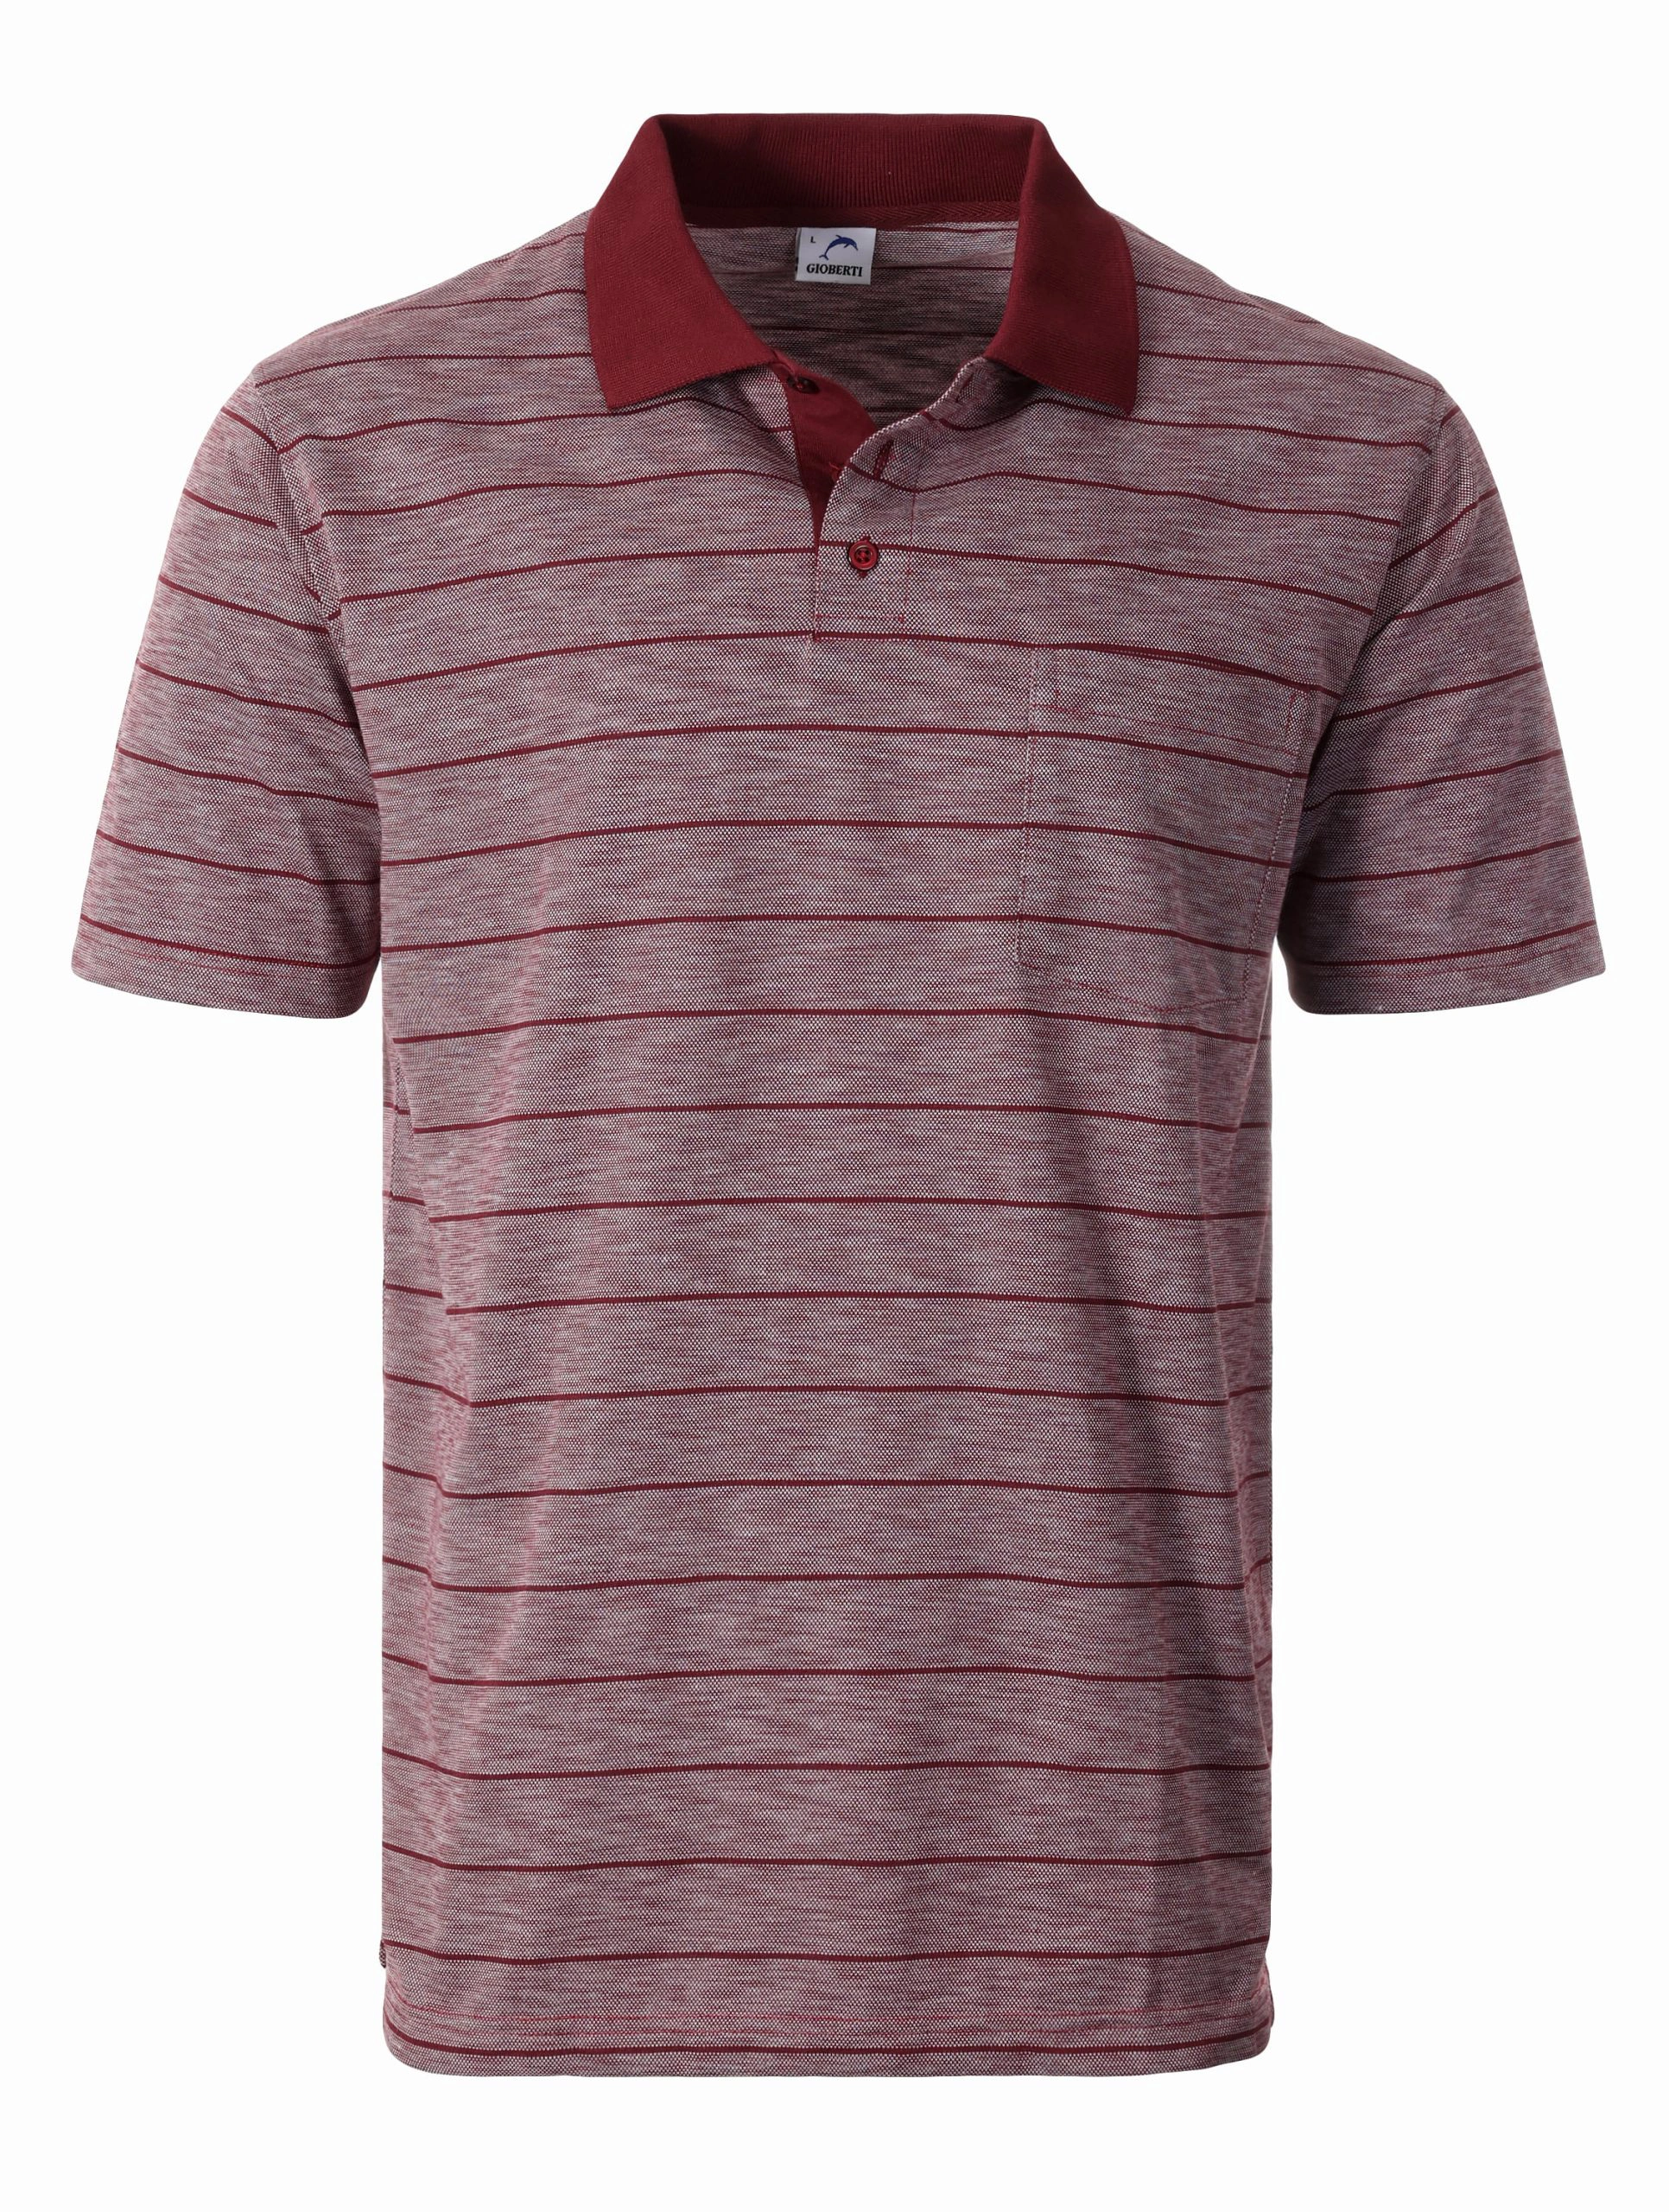 Wholesale Mens Regular Fit Striped Polo Shirt Supplier In Dubai